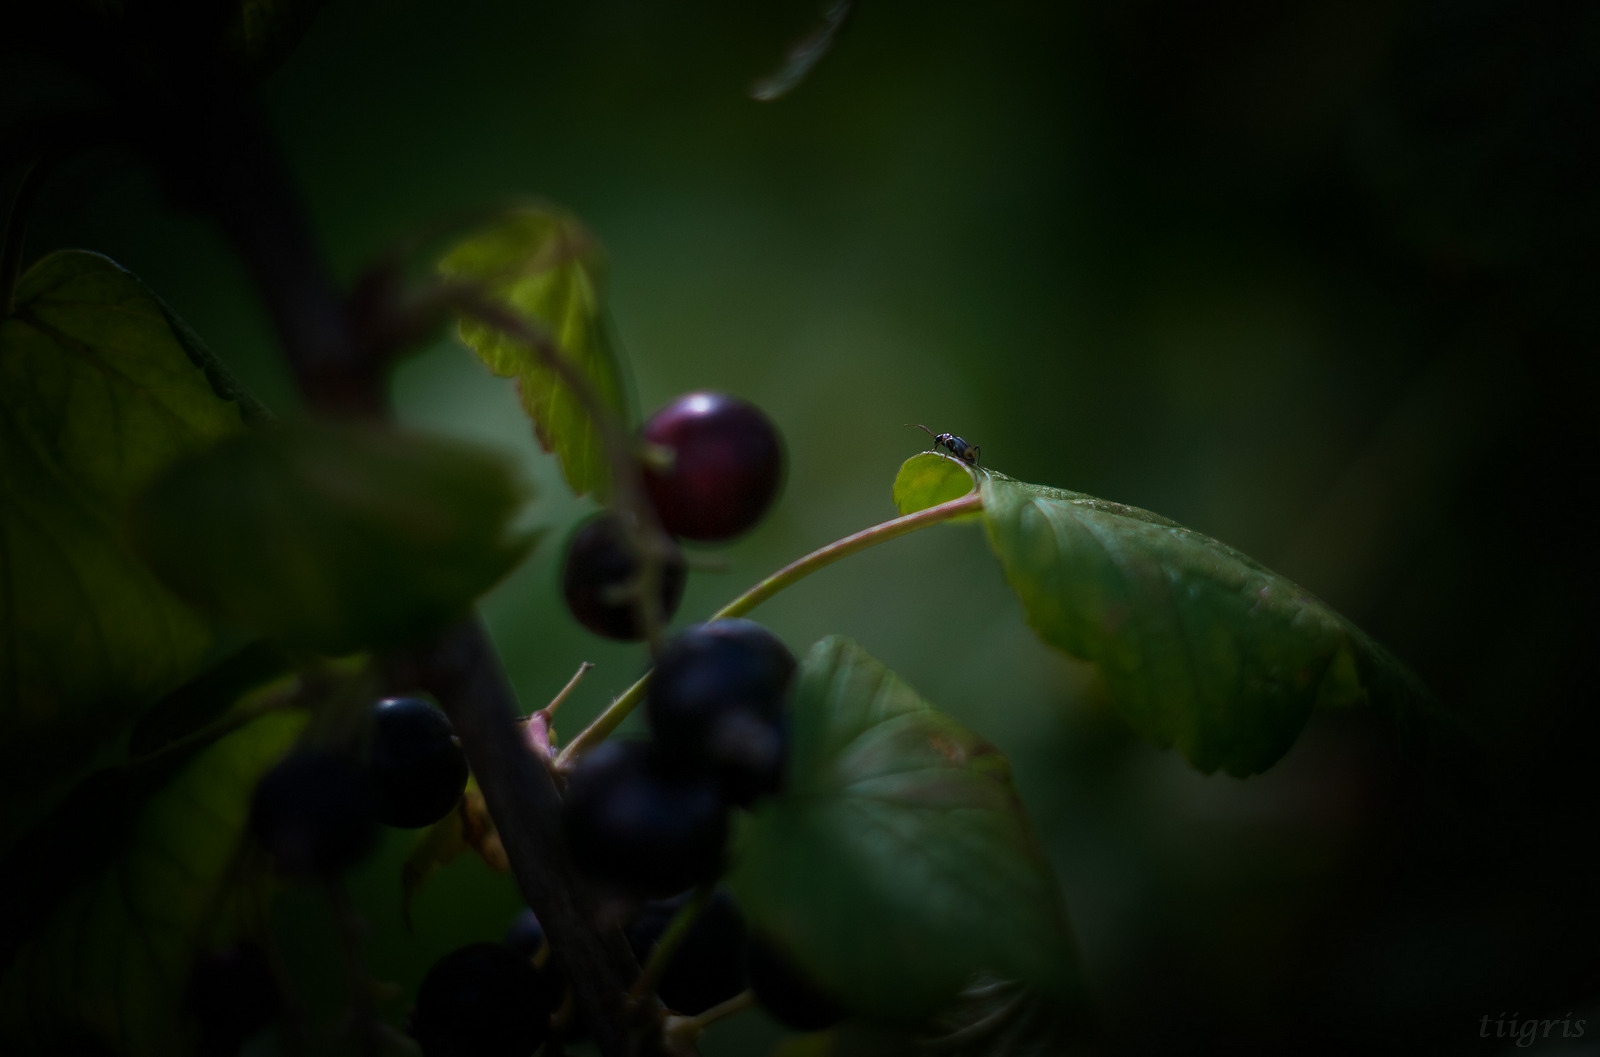 Хранитель ягодной грозди | Фотограф Андрей Бубнович | foto.by фото.бай